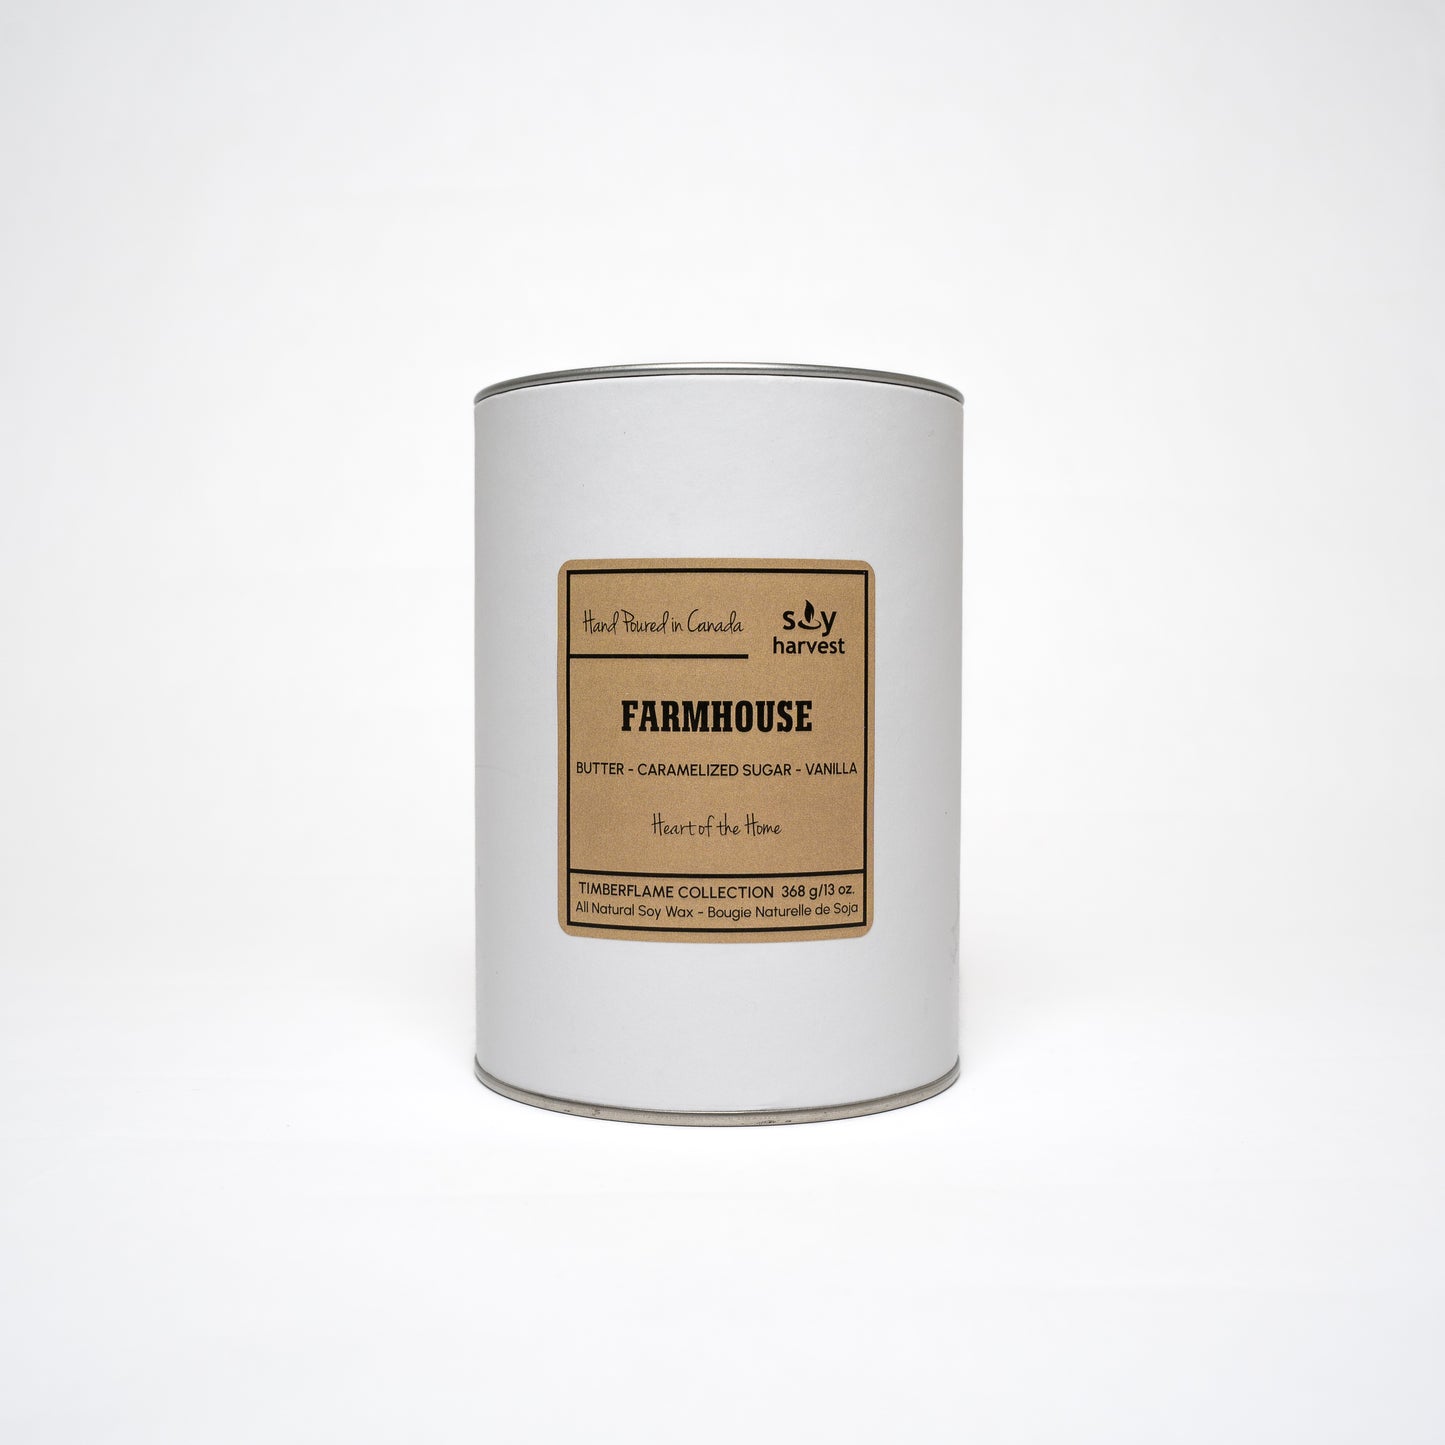 Timberflame Candle | Farmhouse